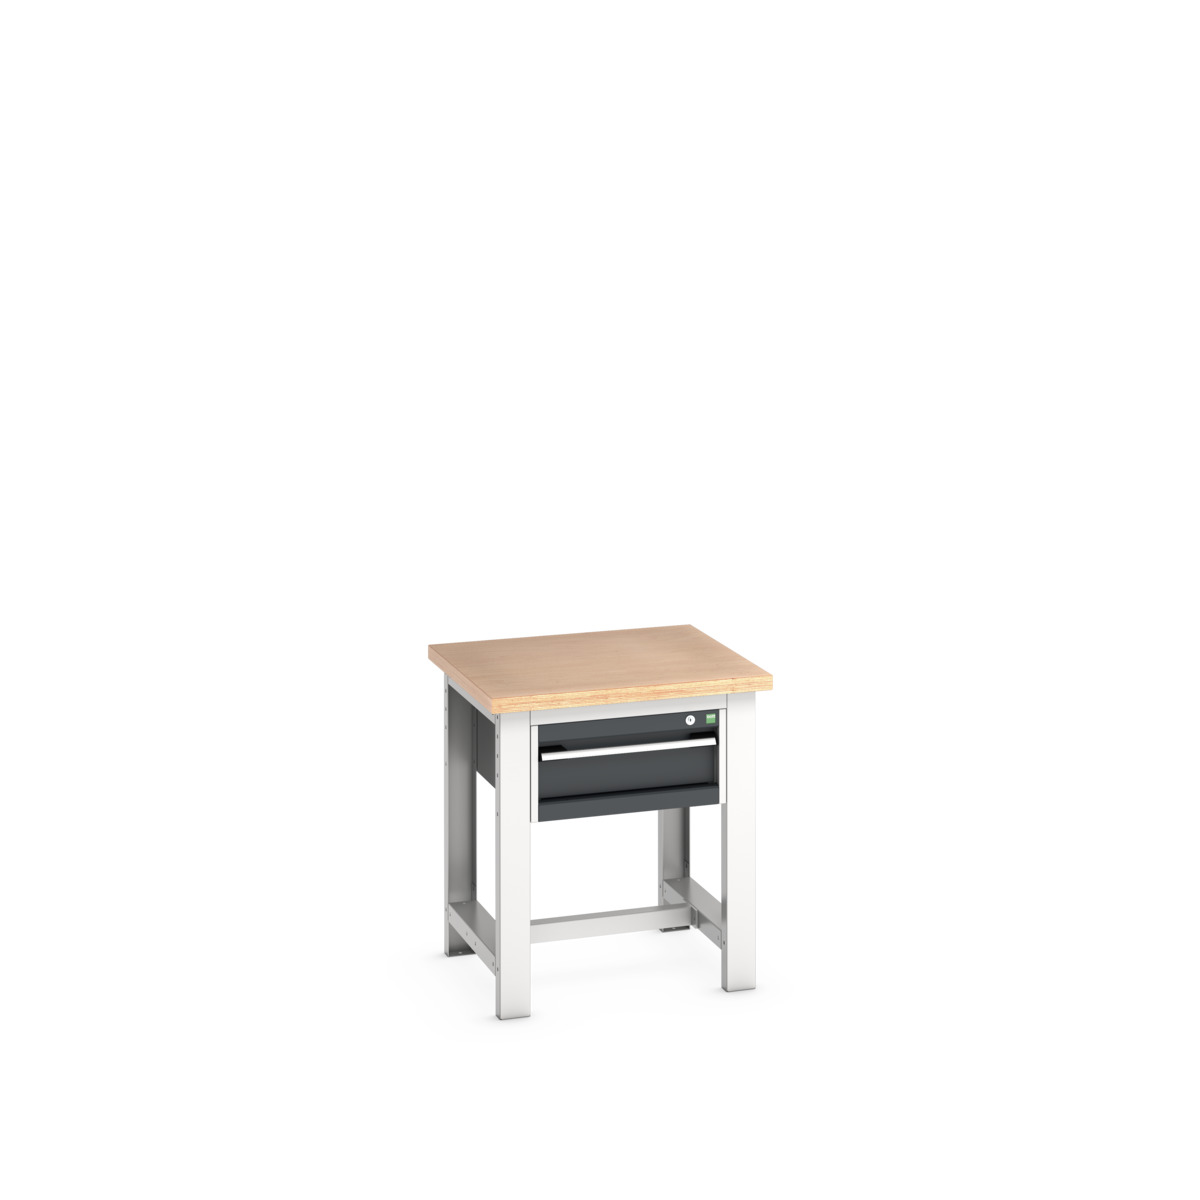 41003521. - cubio framework bench (mpx)